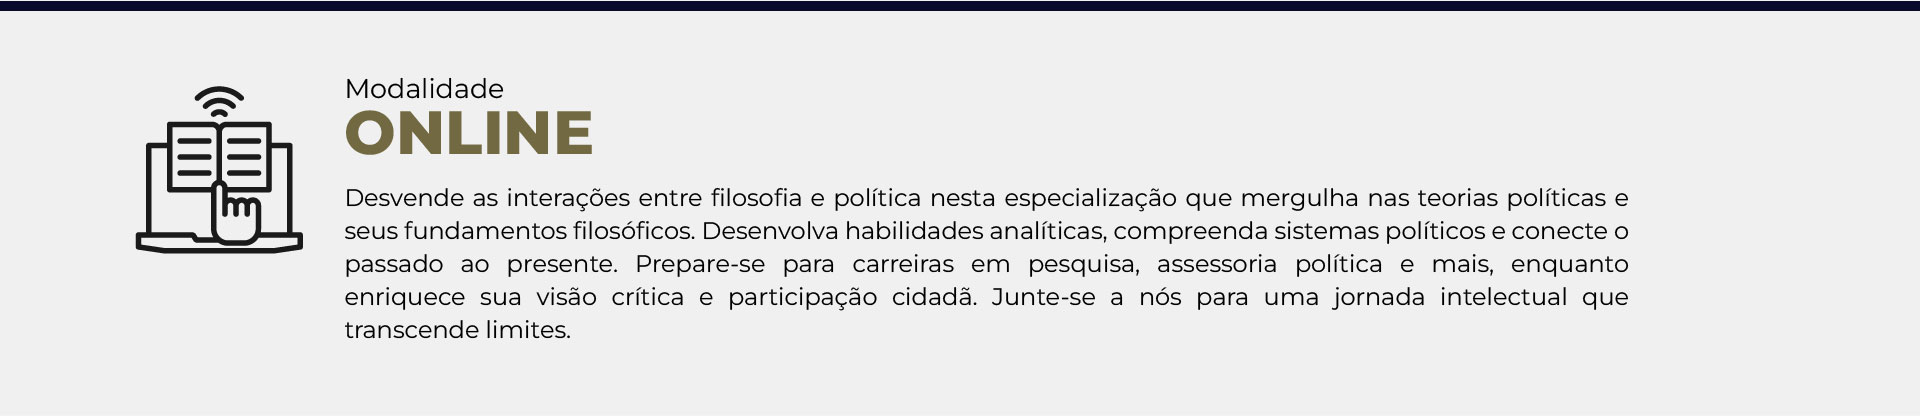 Ciências-Politicas-02.jpg